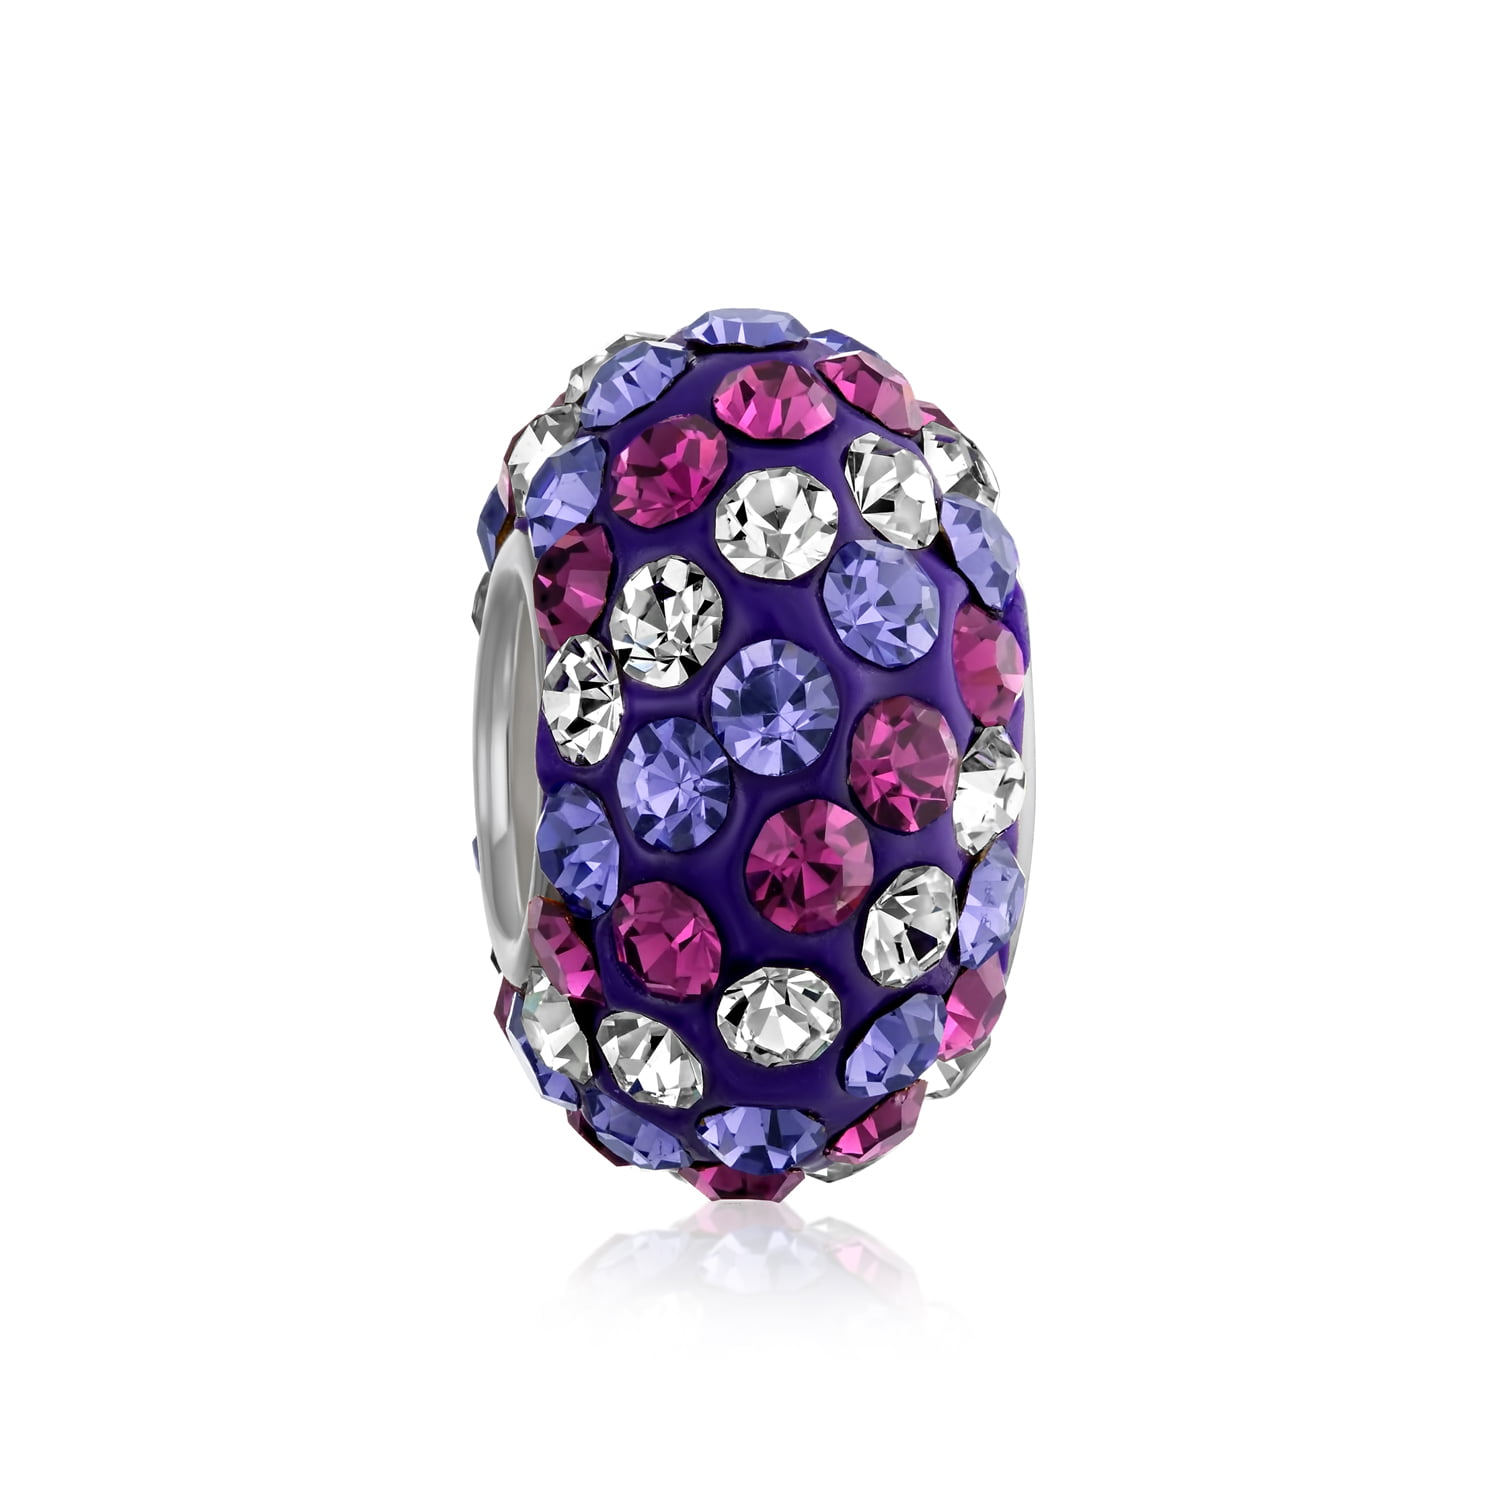 NEW Silver Purple Love Hearts Ornate Spacer European Charm Bracelet Pendant Bead